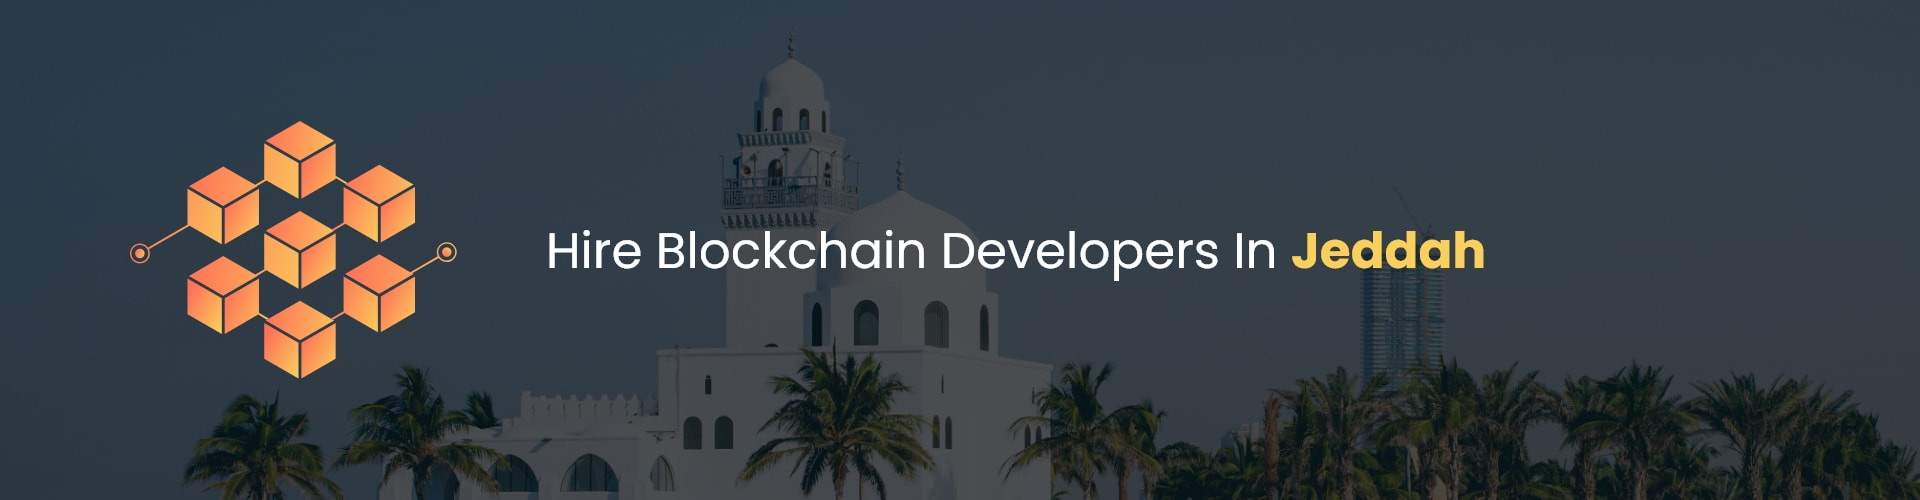 hire blockchain developers in jeddah